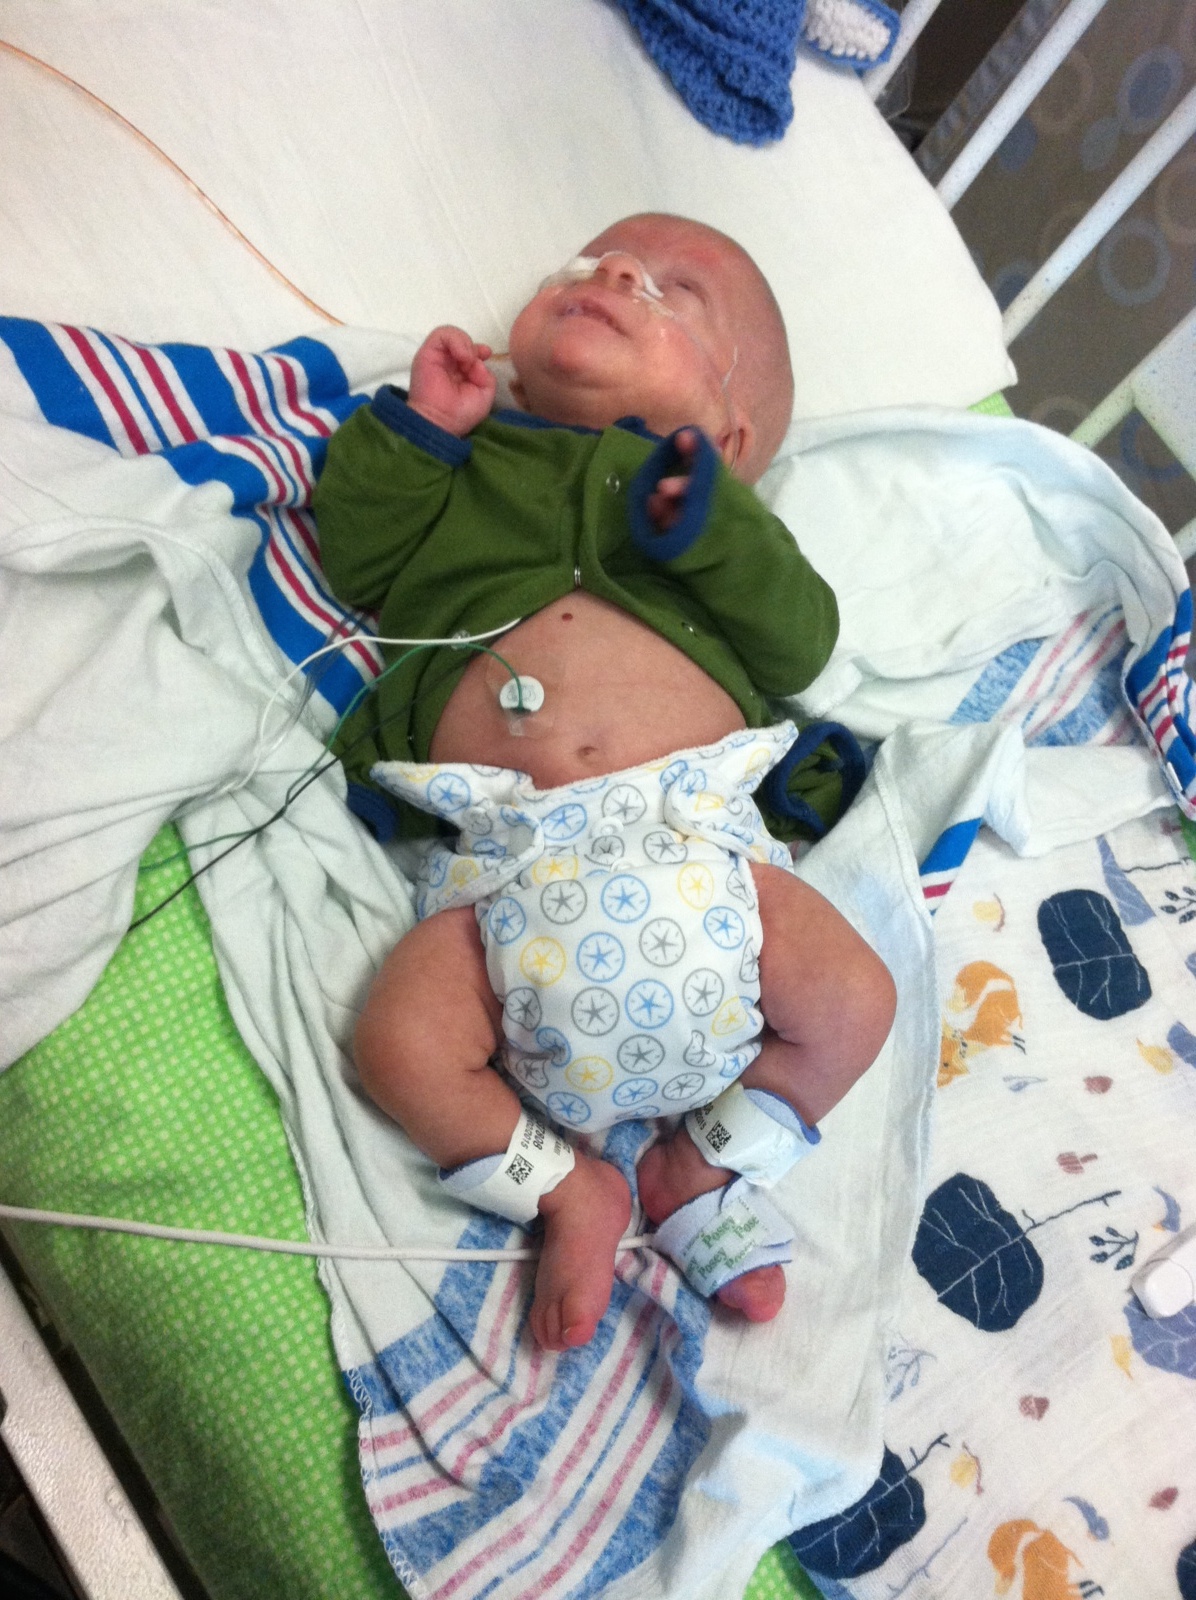 @ThirstiesInc Newborn #clothdiapers on 5 lb 10 oz 13 wk old micropreemie - via @chgdiapers